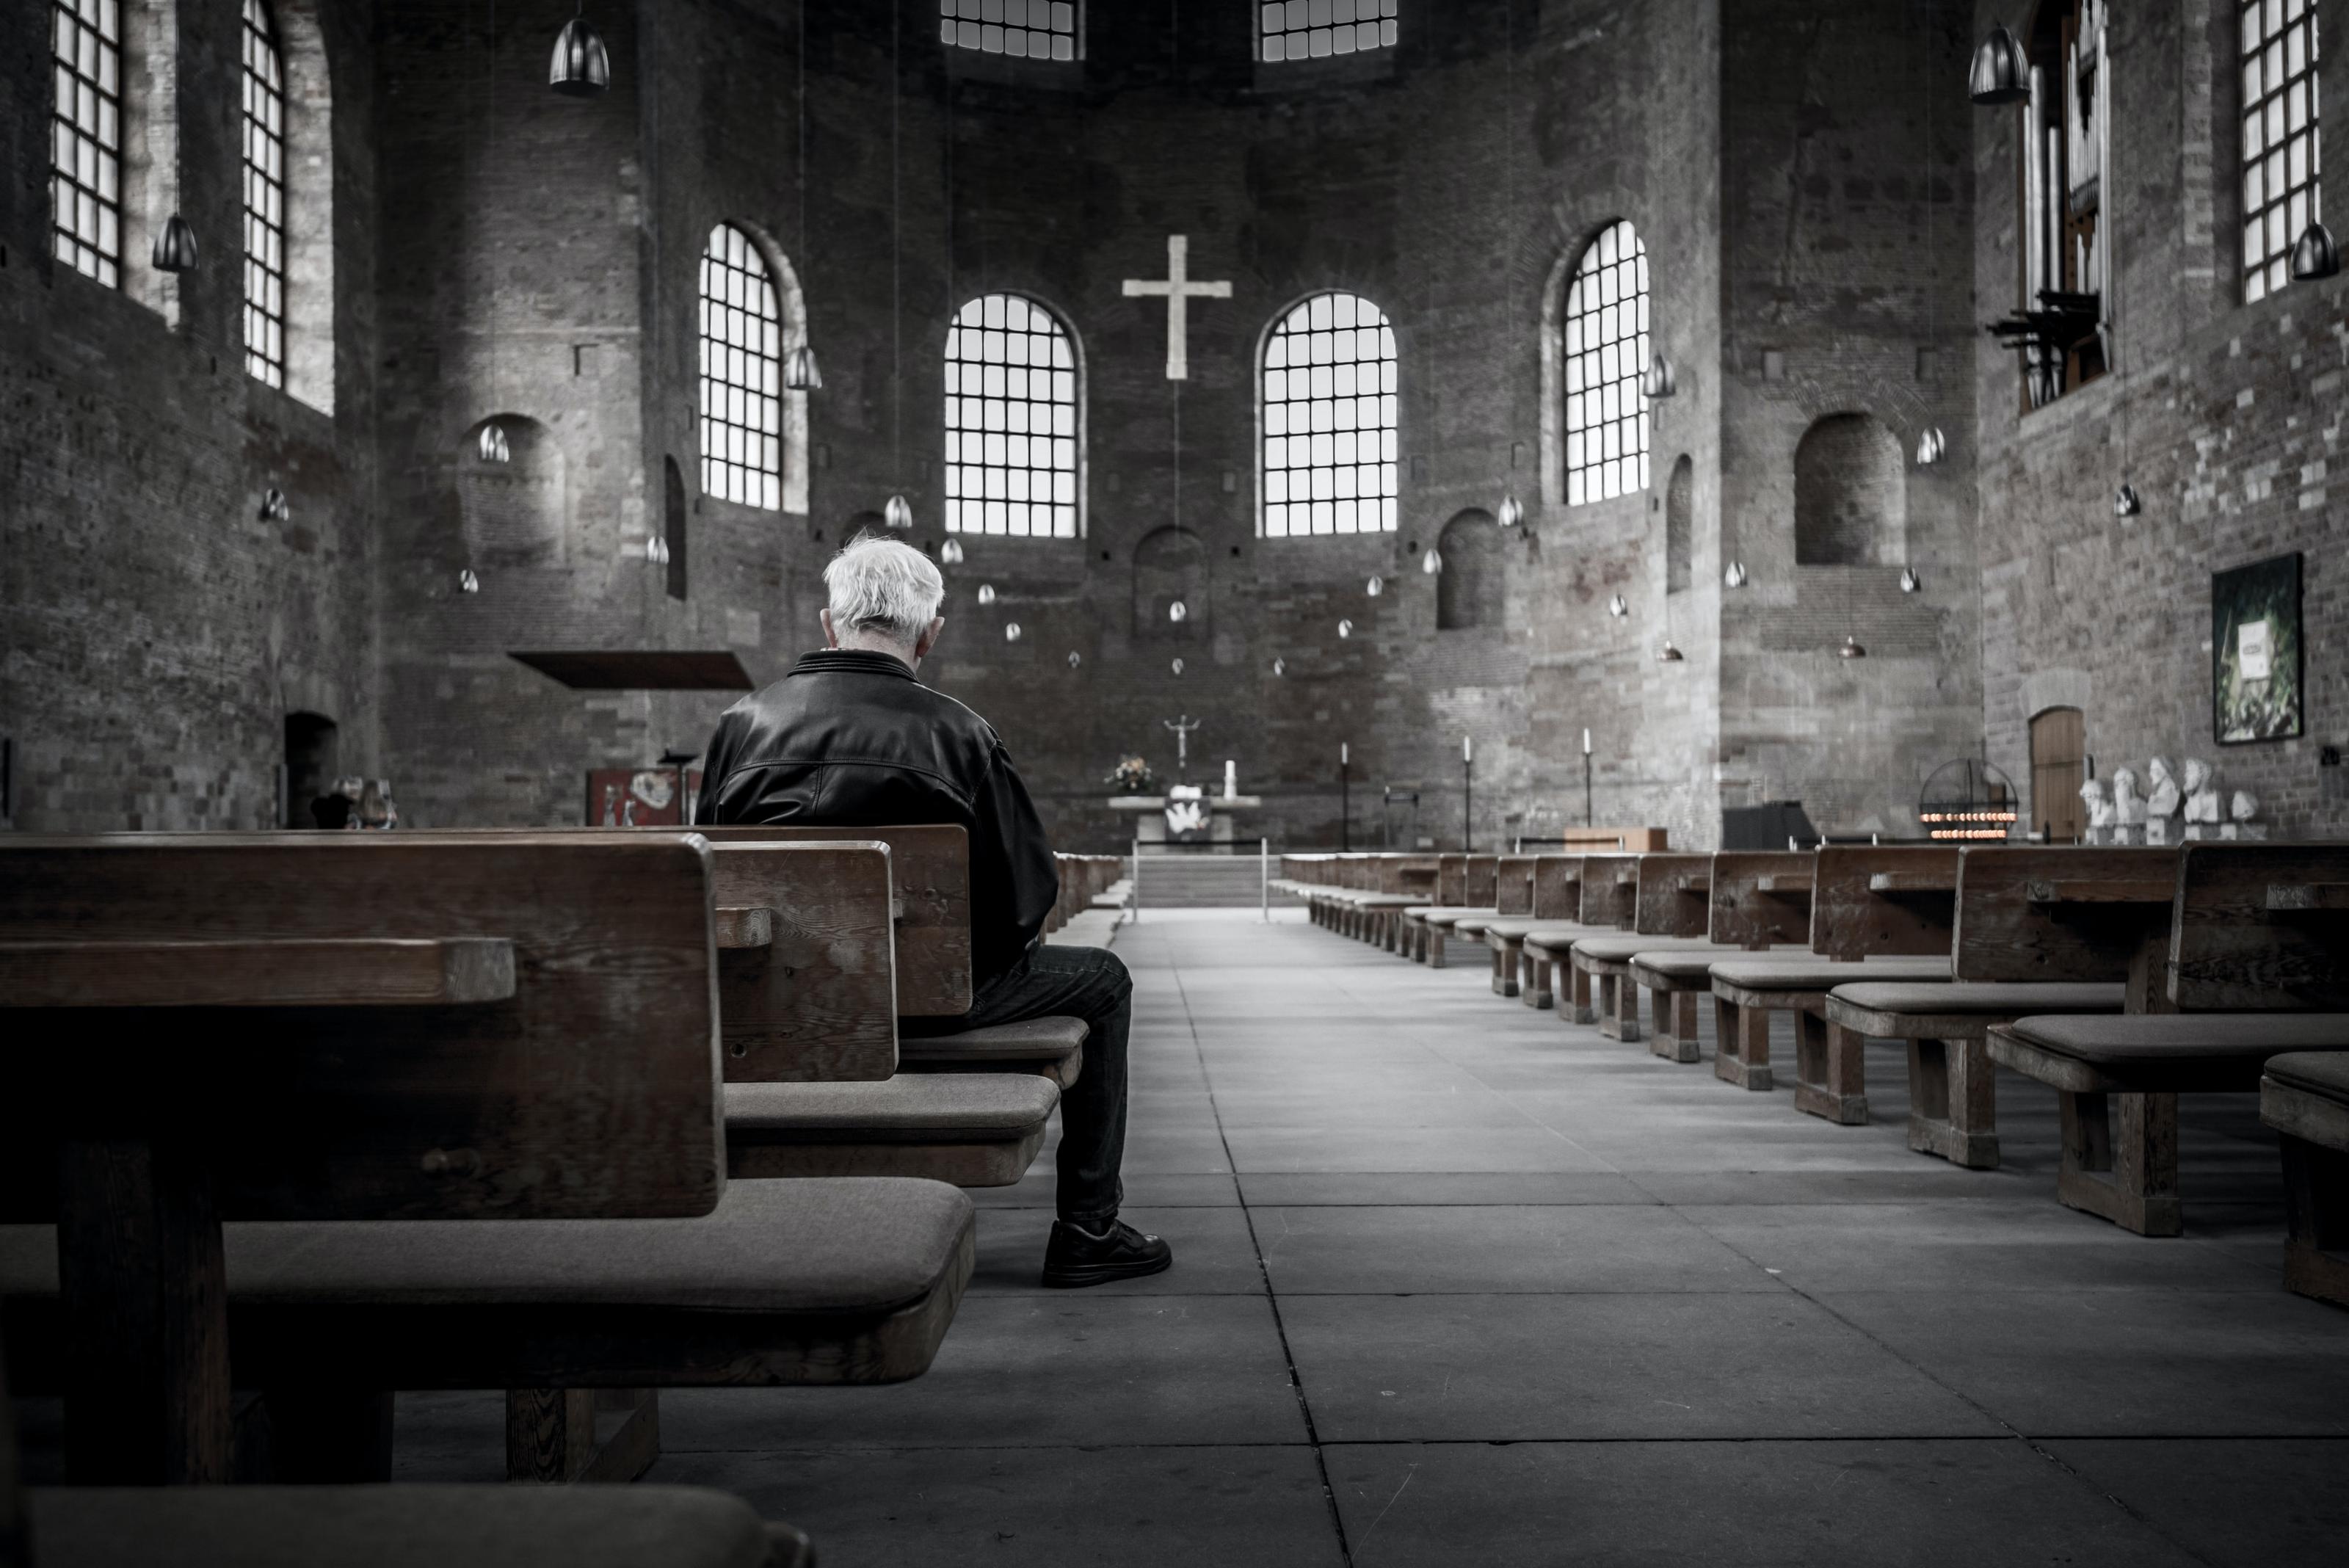 A Christian Man: The Identity Crisis